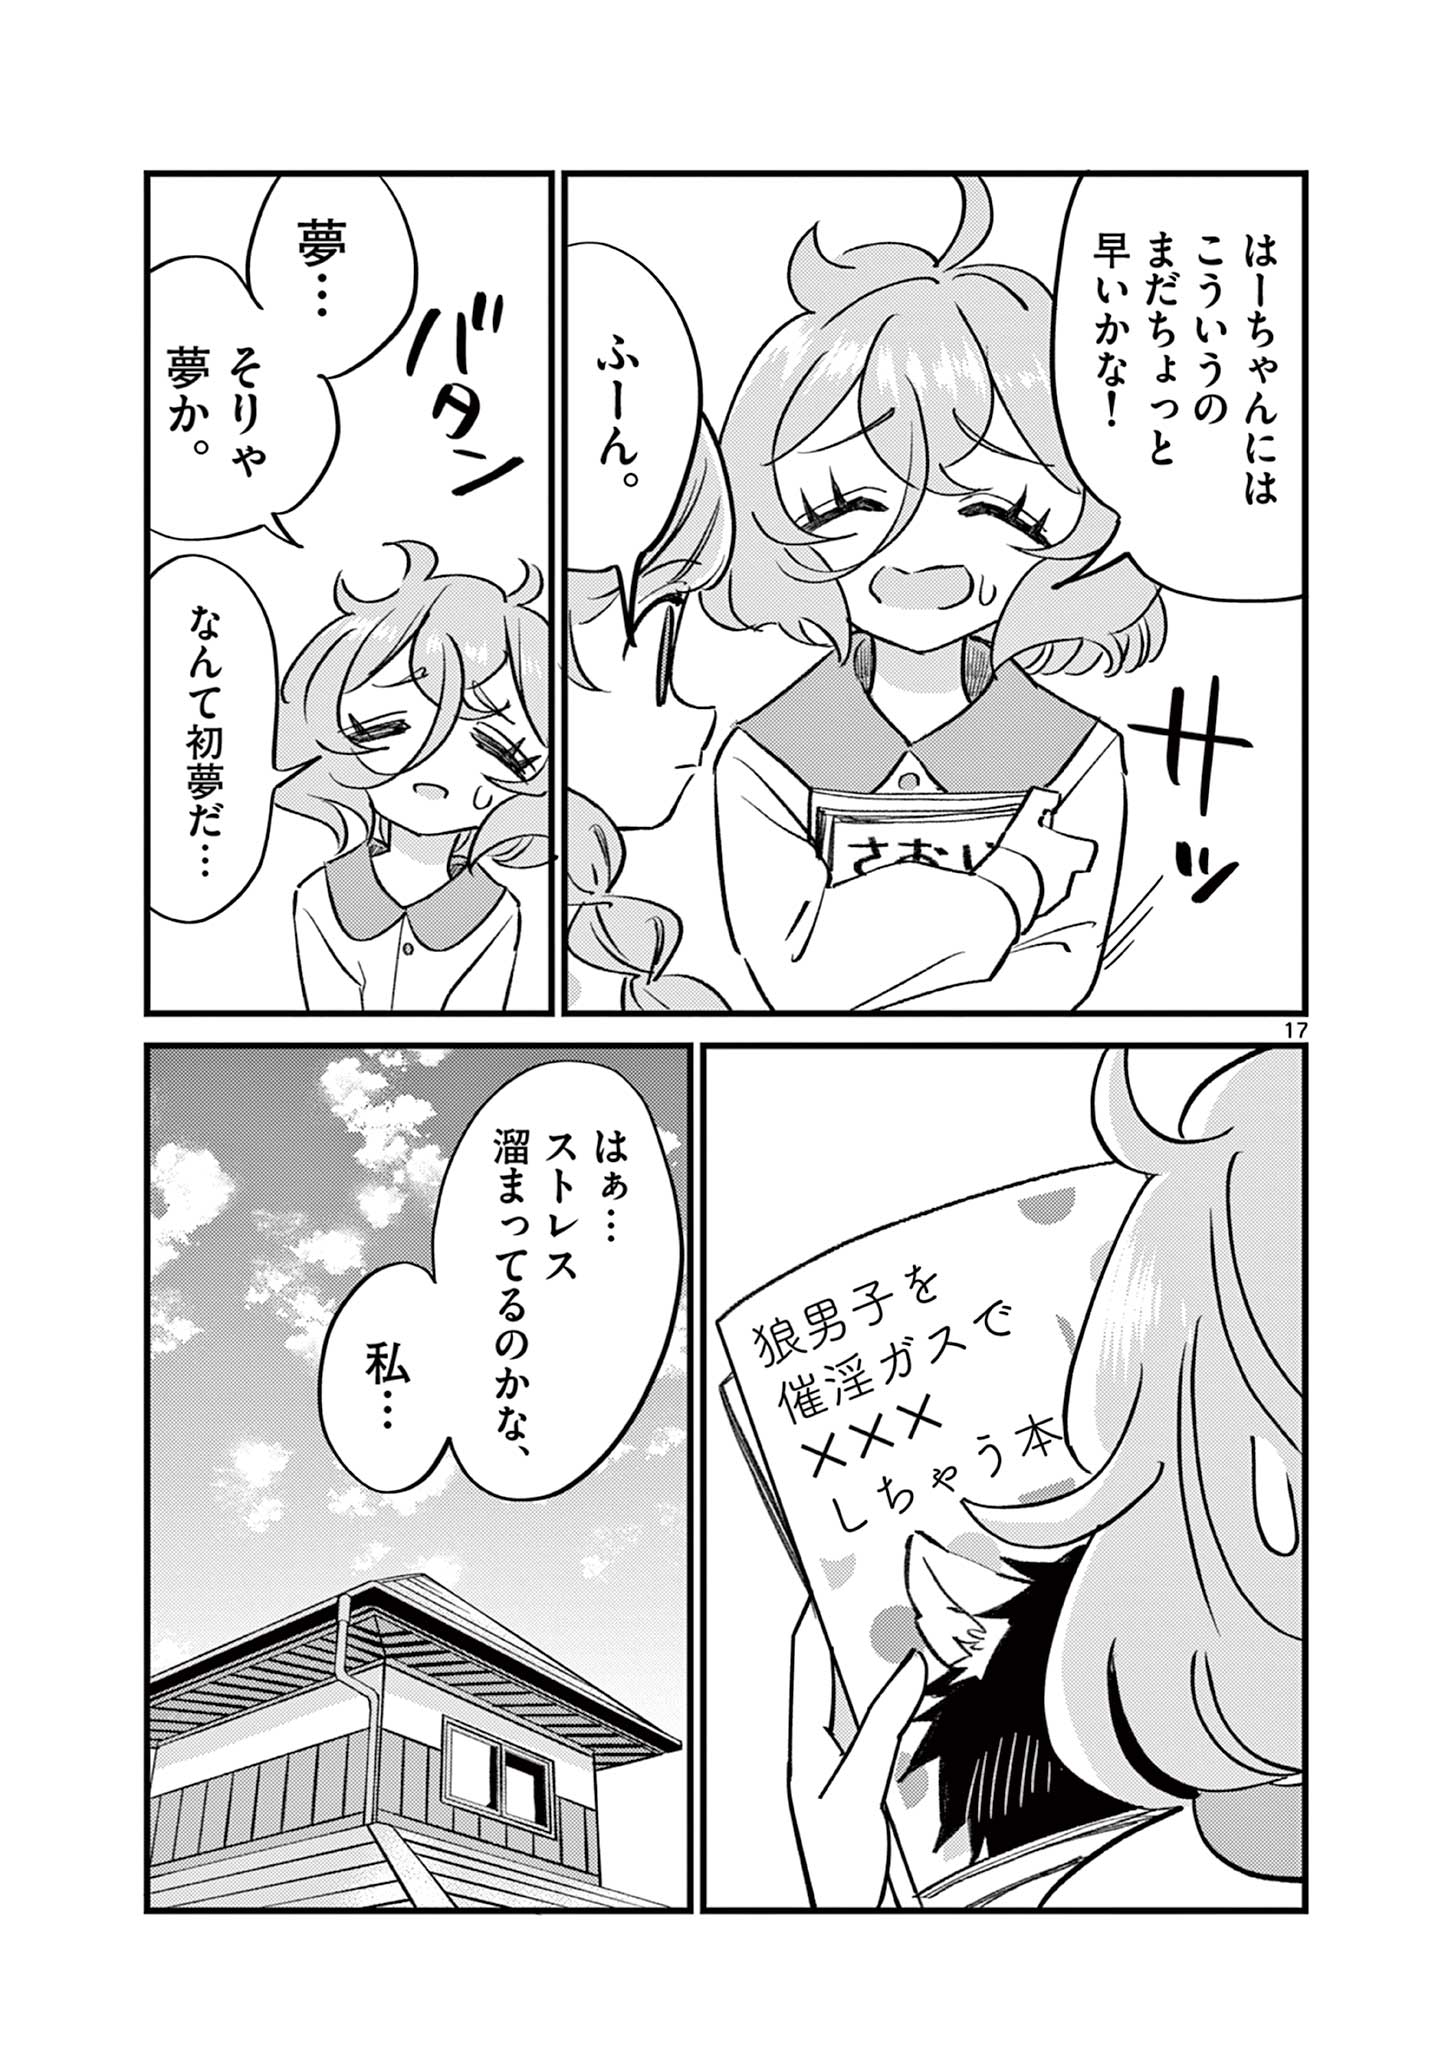 Ranka-chan wa Bitch ni Naritai - Chapter 19 - Page 17